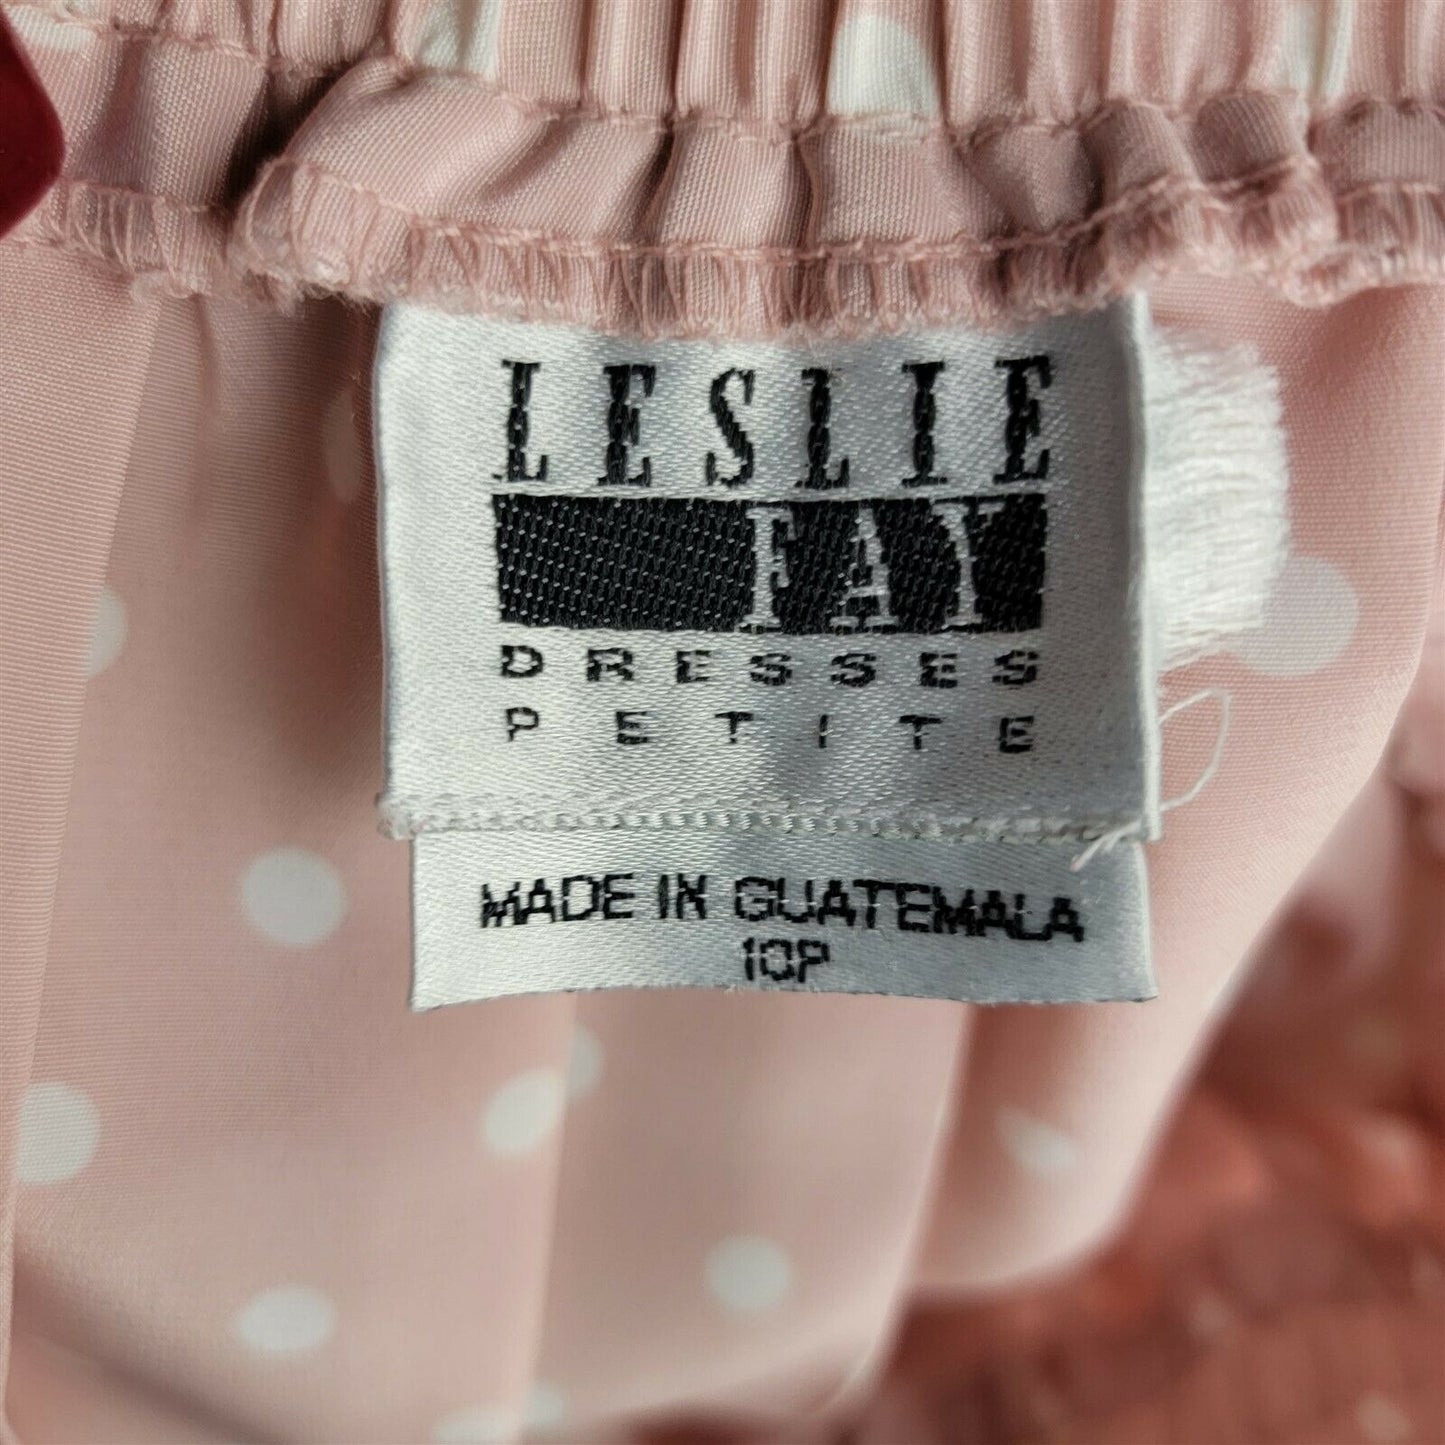 Leslie Fay Pink Polka Dot 2 Piece Skirt Top Set Womens Size Petite 10P